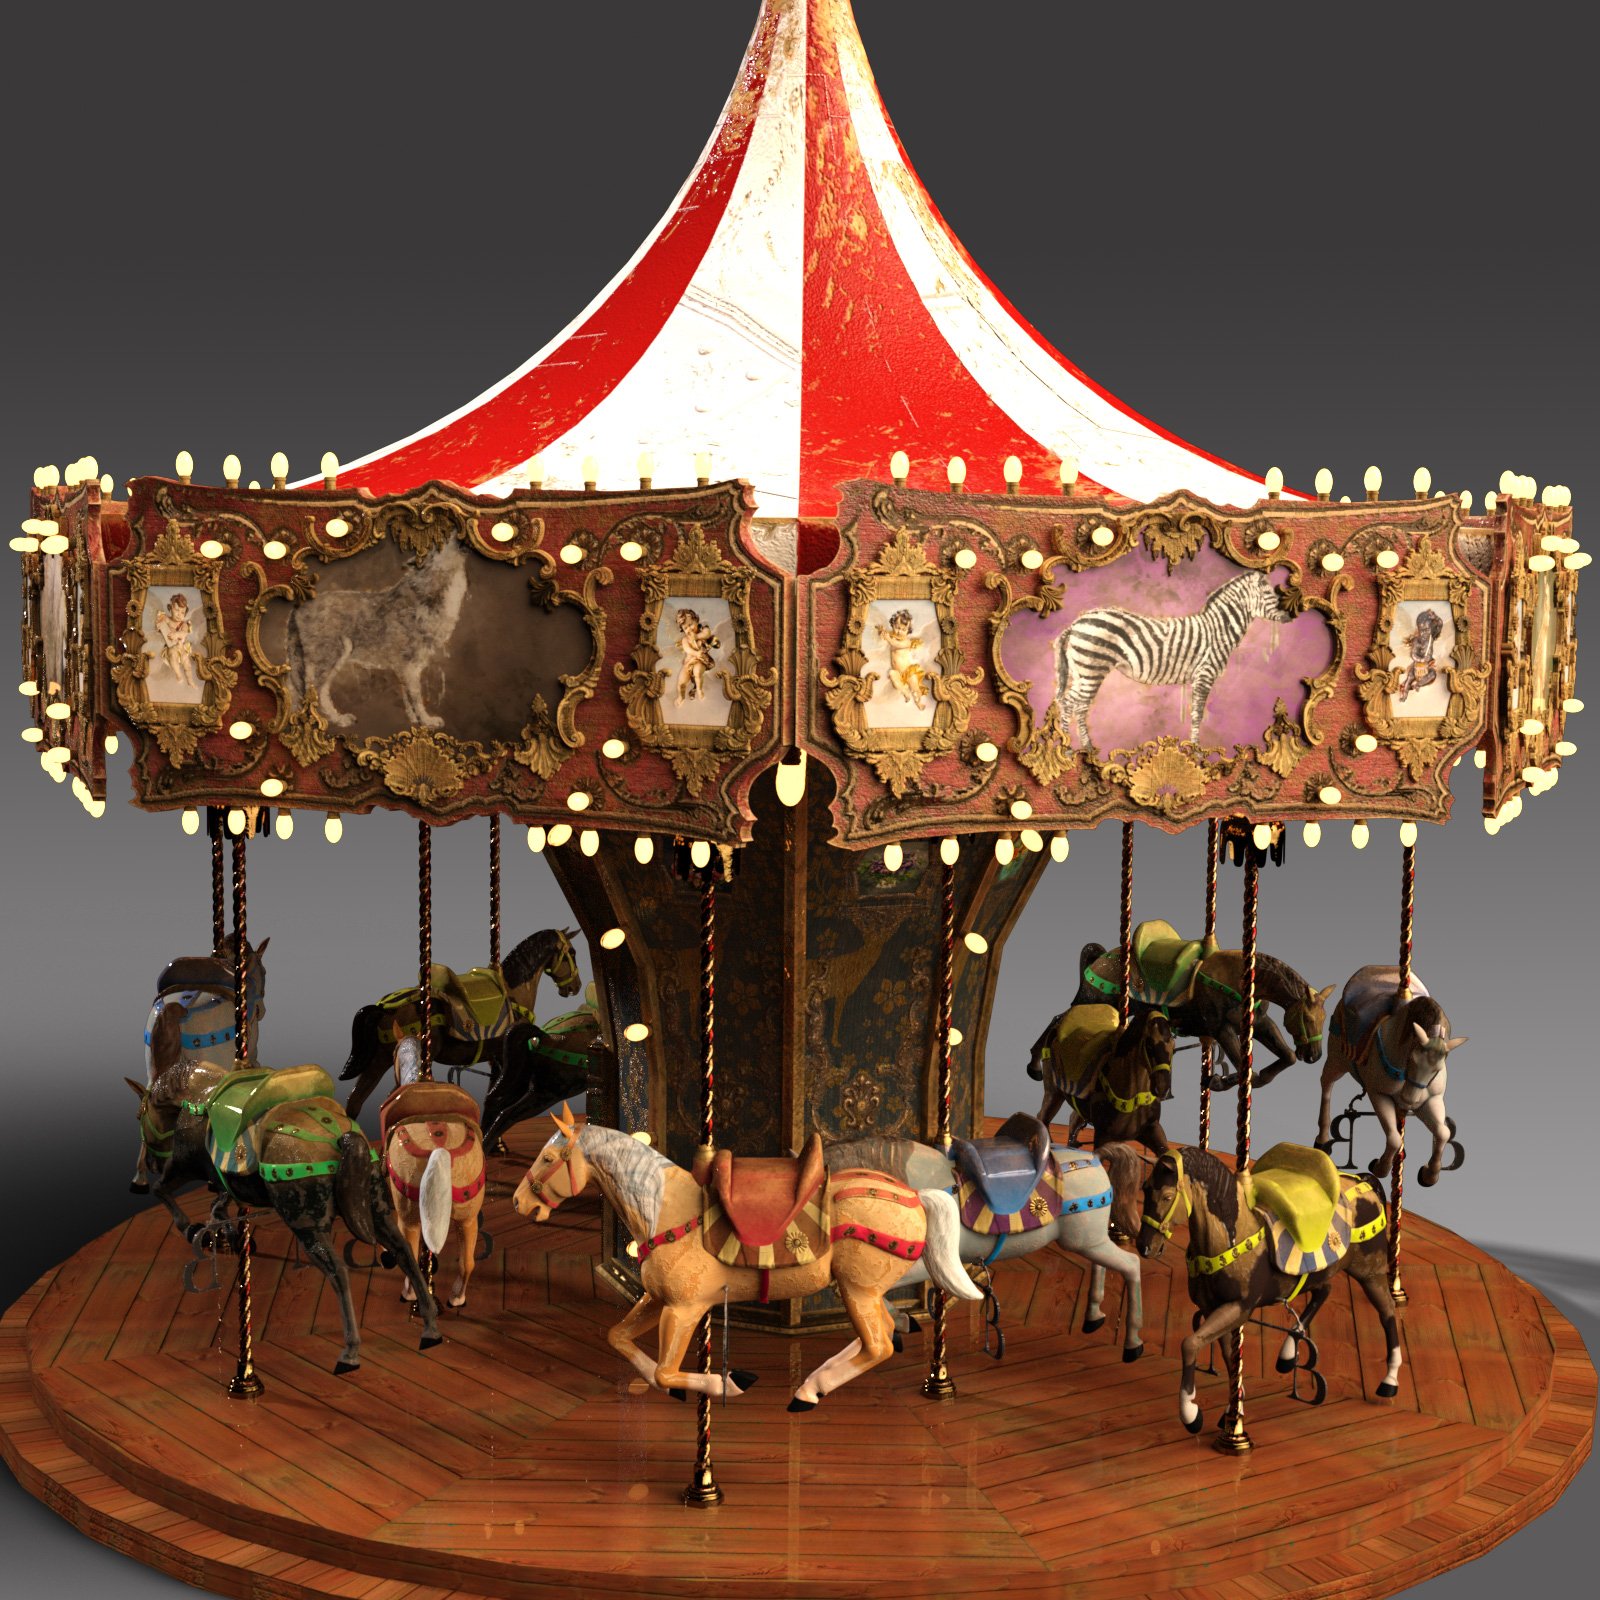 Carousel by: Ansiko, 3D Models by Daz 3D